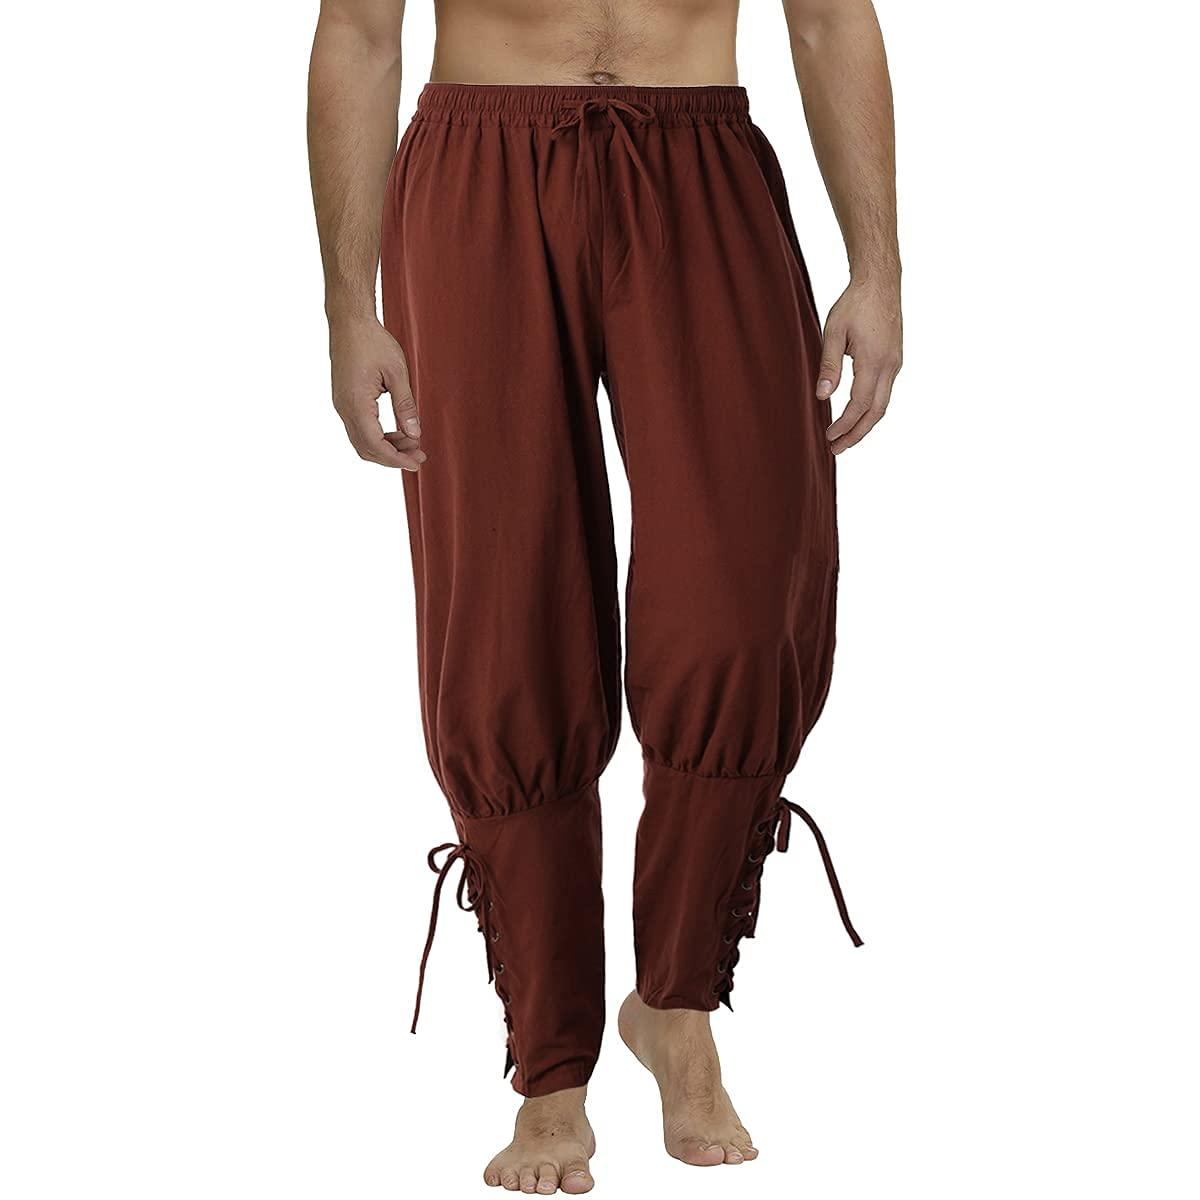 COSDREAMER Men's Medieval Pants Viking Pirate Costume Trousers Brown 0